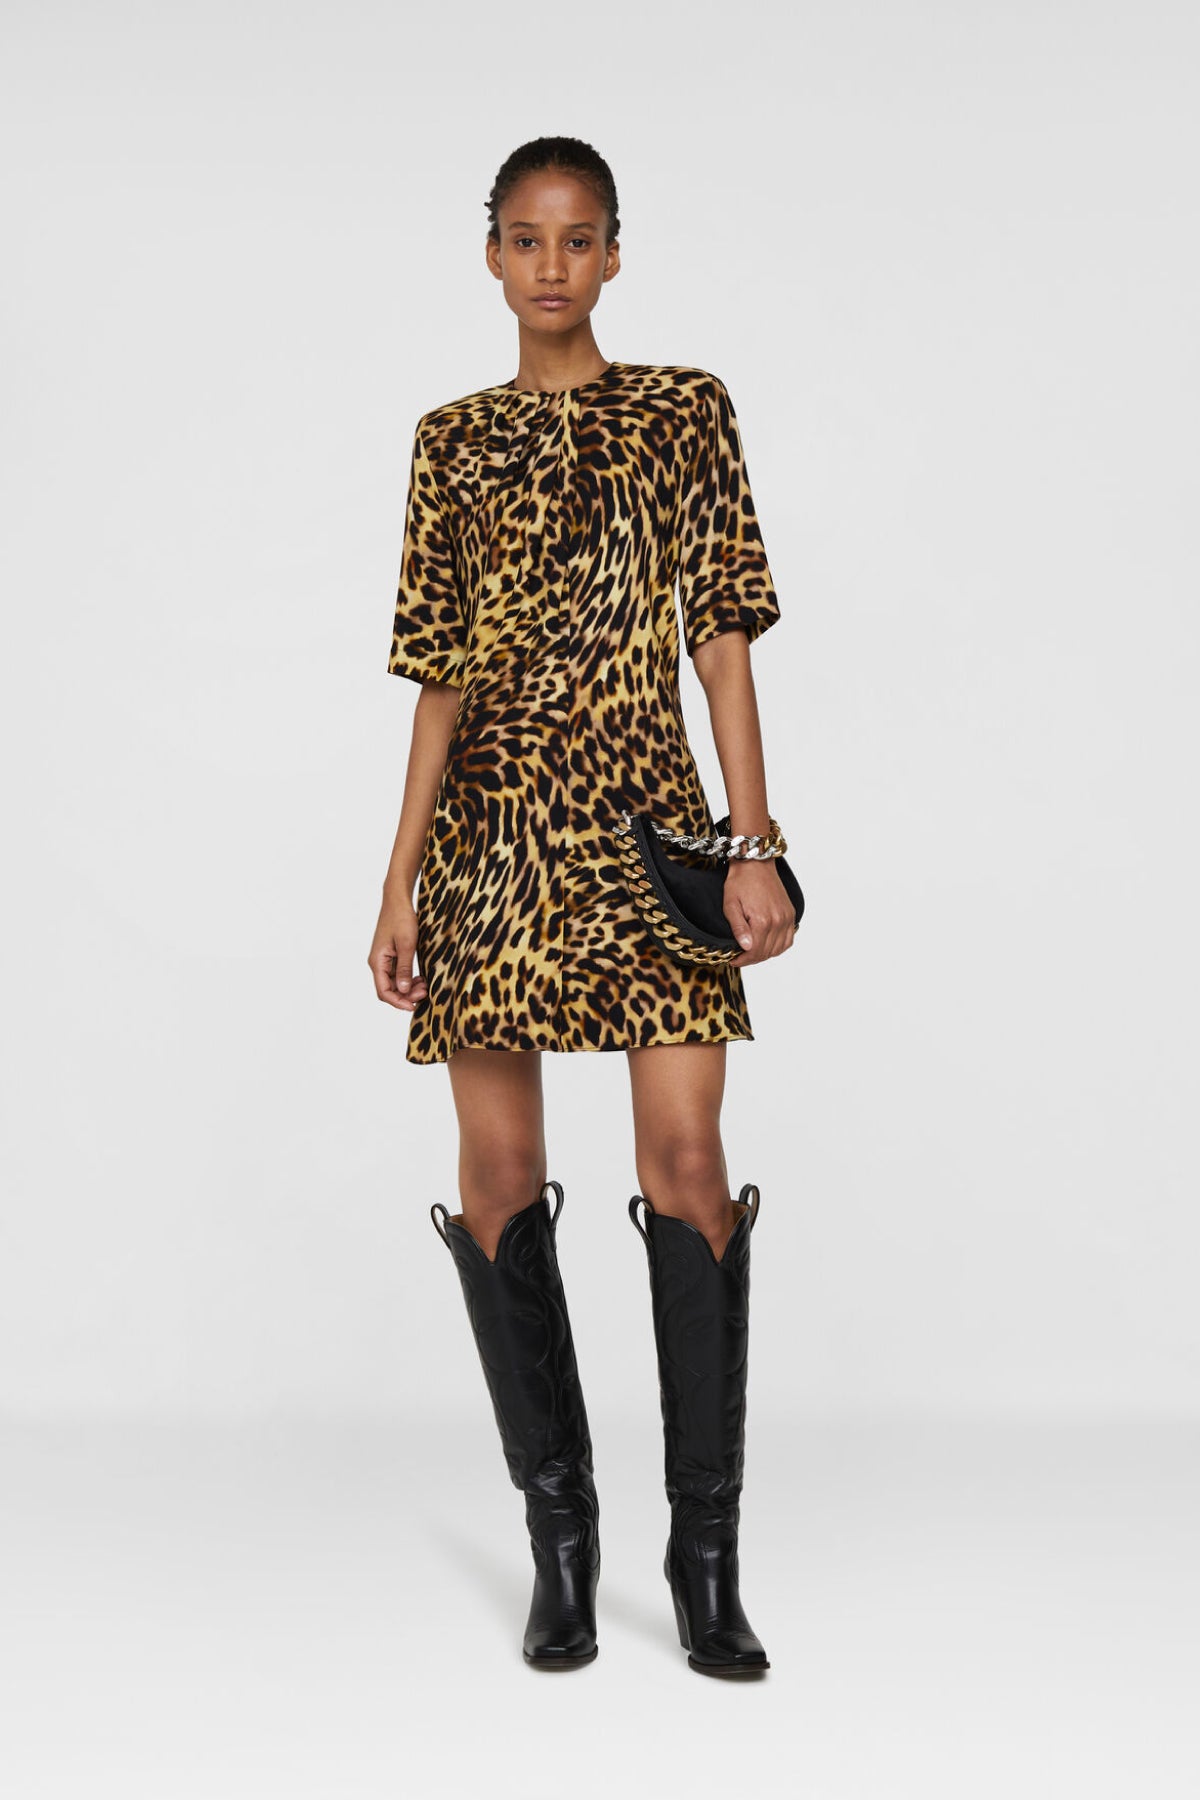 Stella McCartney Cheetah Print Mini Dress - Tortoiseshell